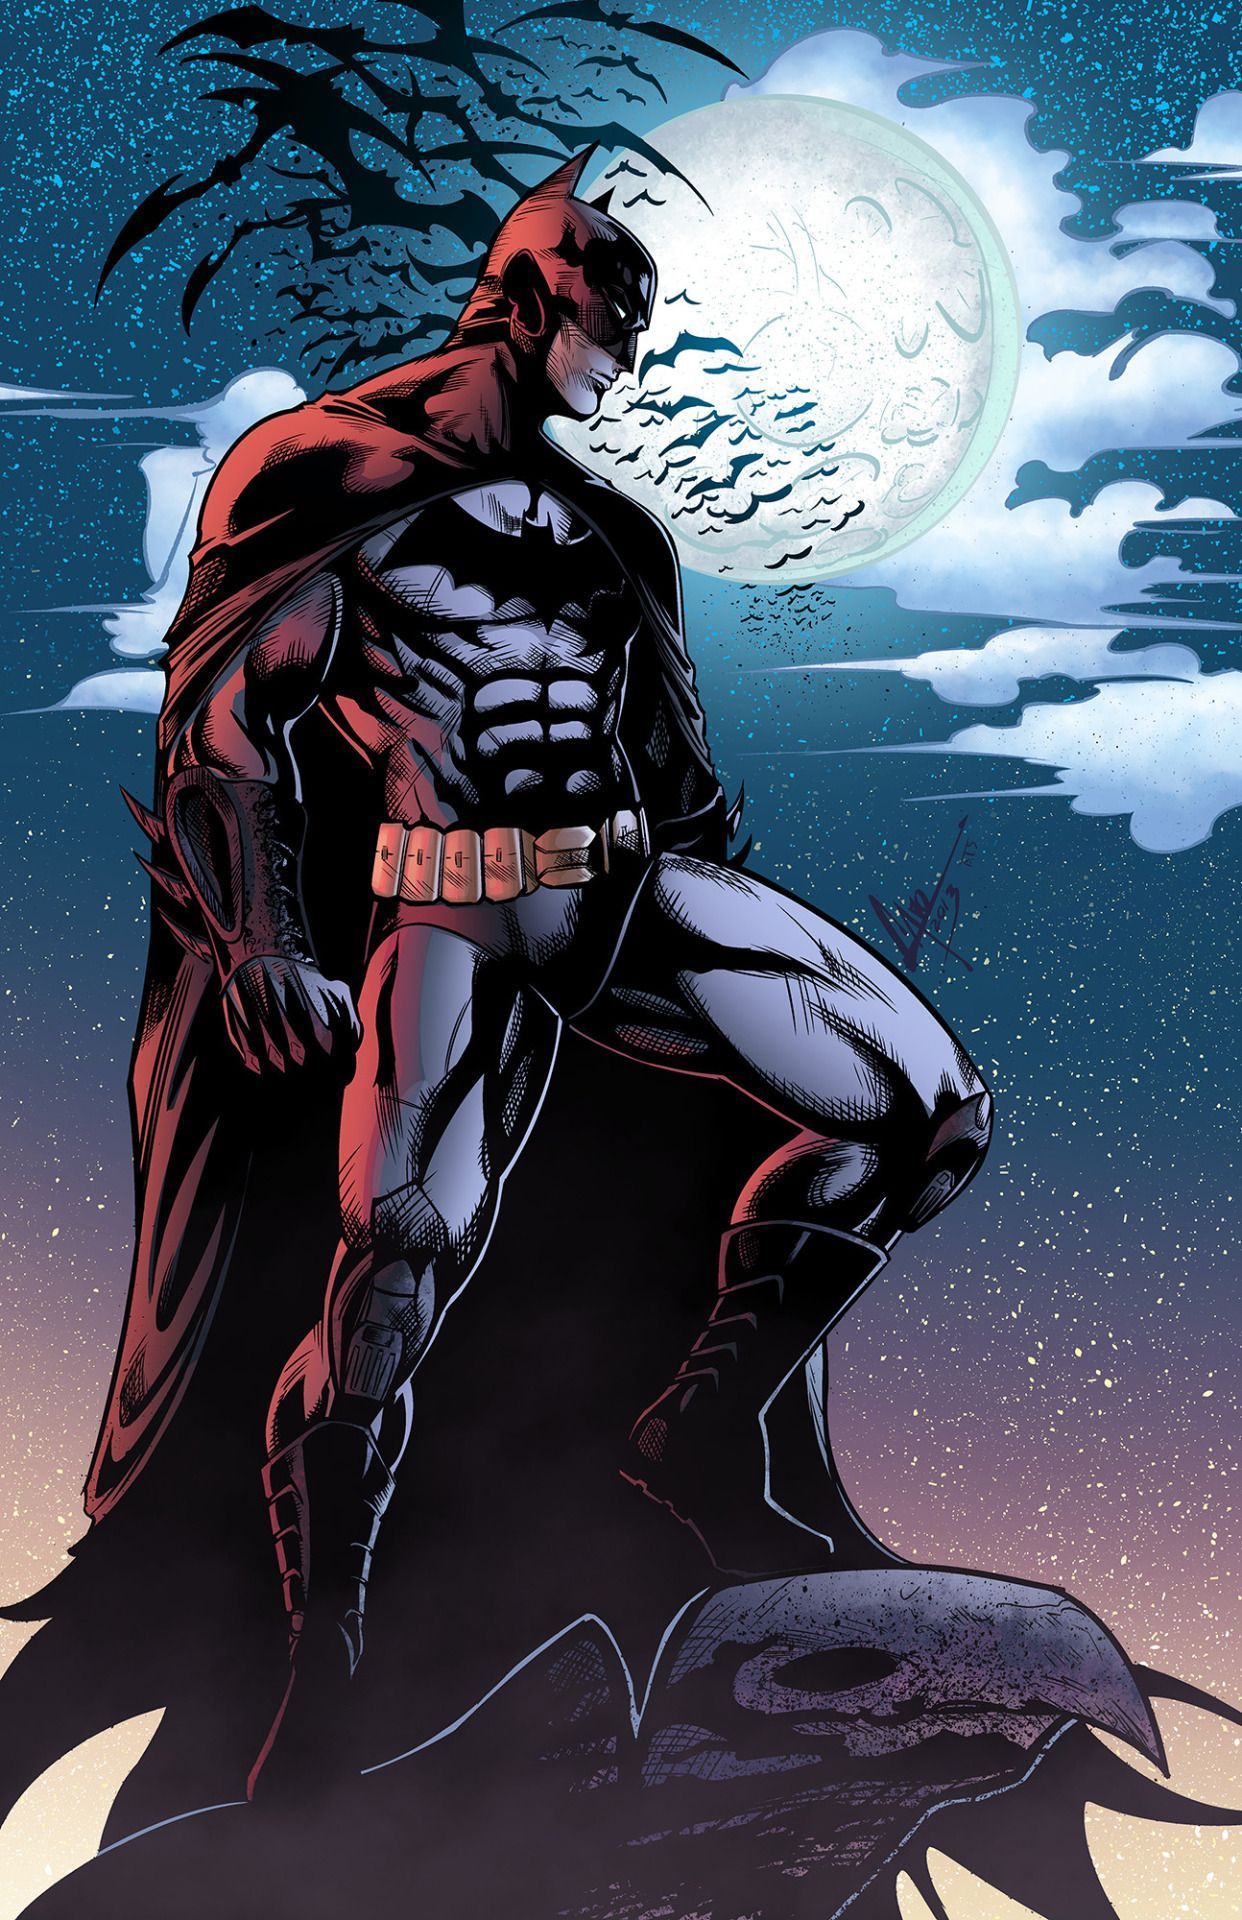 New BATMAN Film Coming 2021 With Younger Dark Knight. Batman